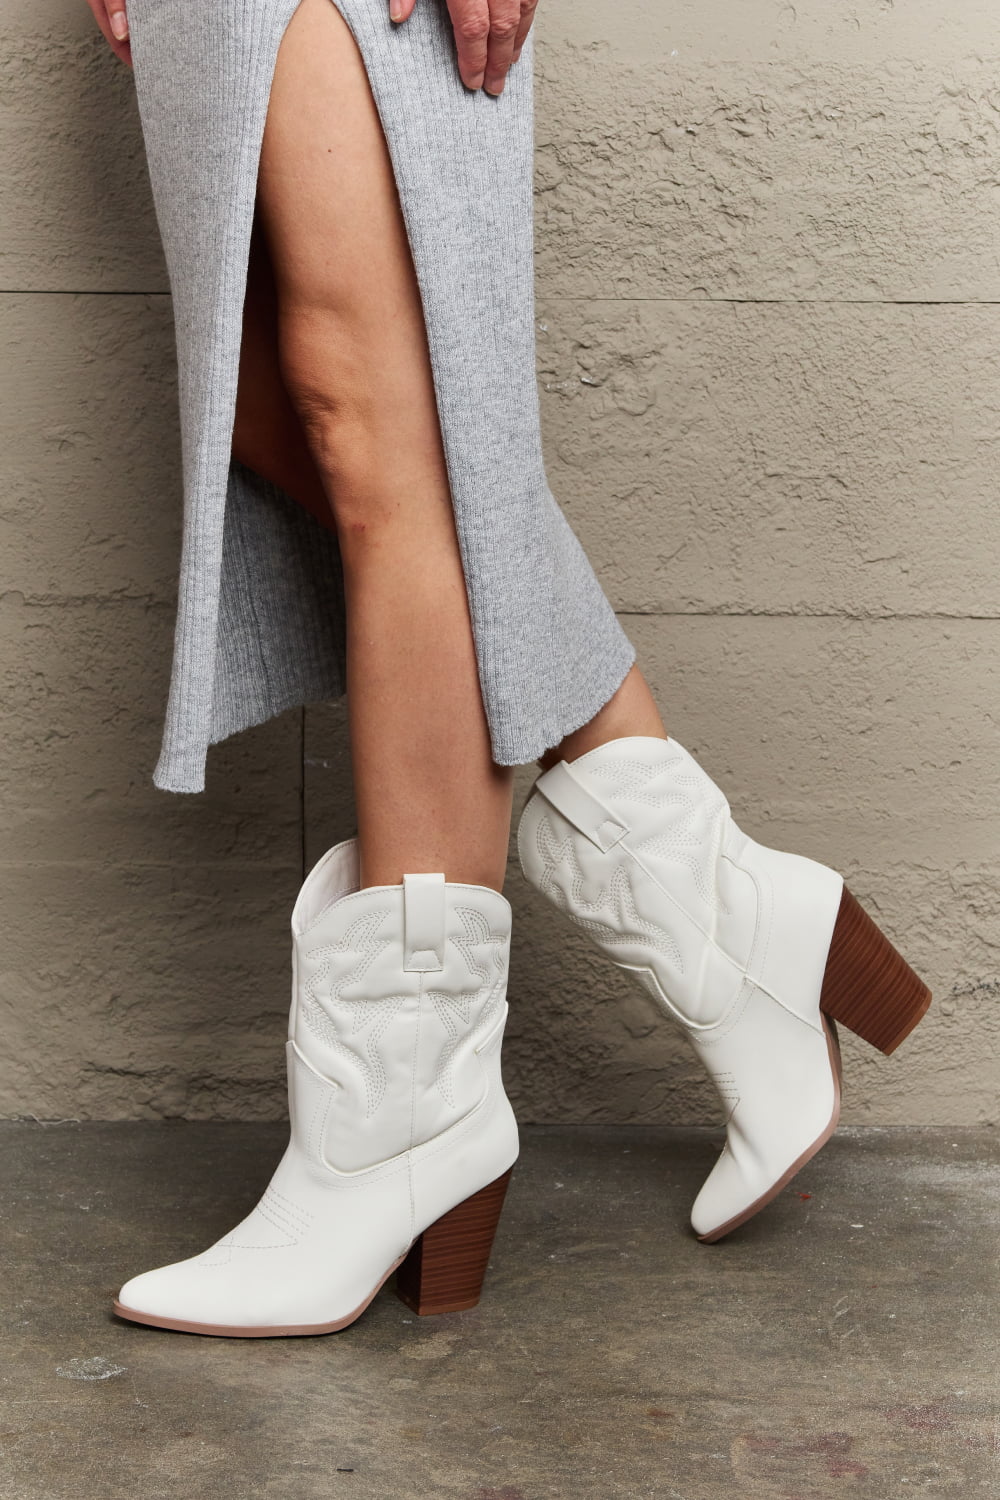 Legend Footwear Bella Cowboy Boots - Fashion Girl Online Store